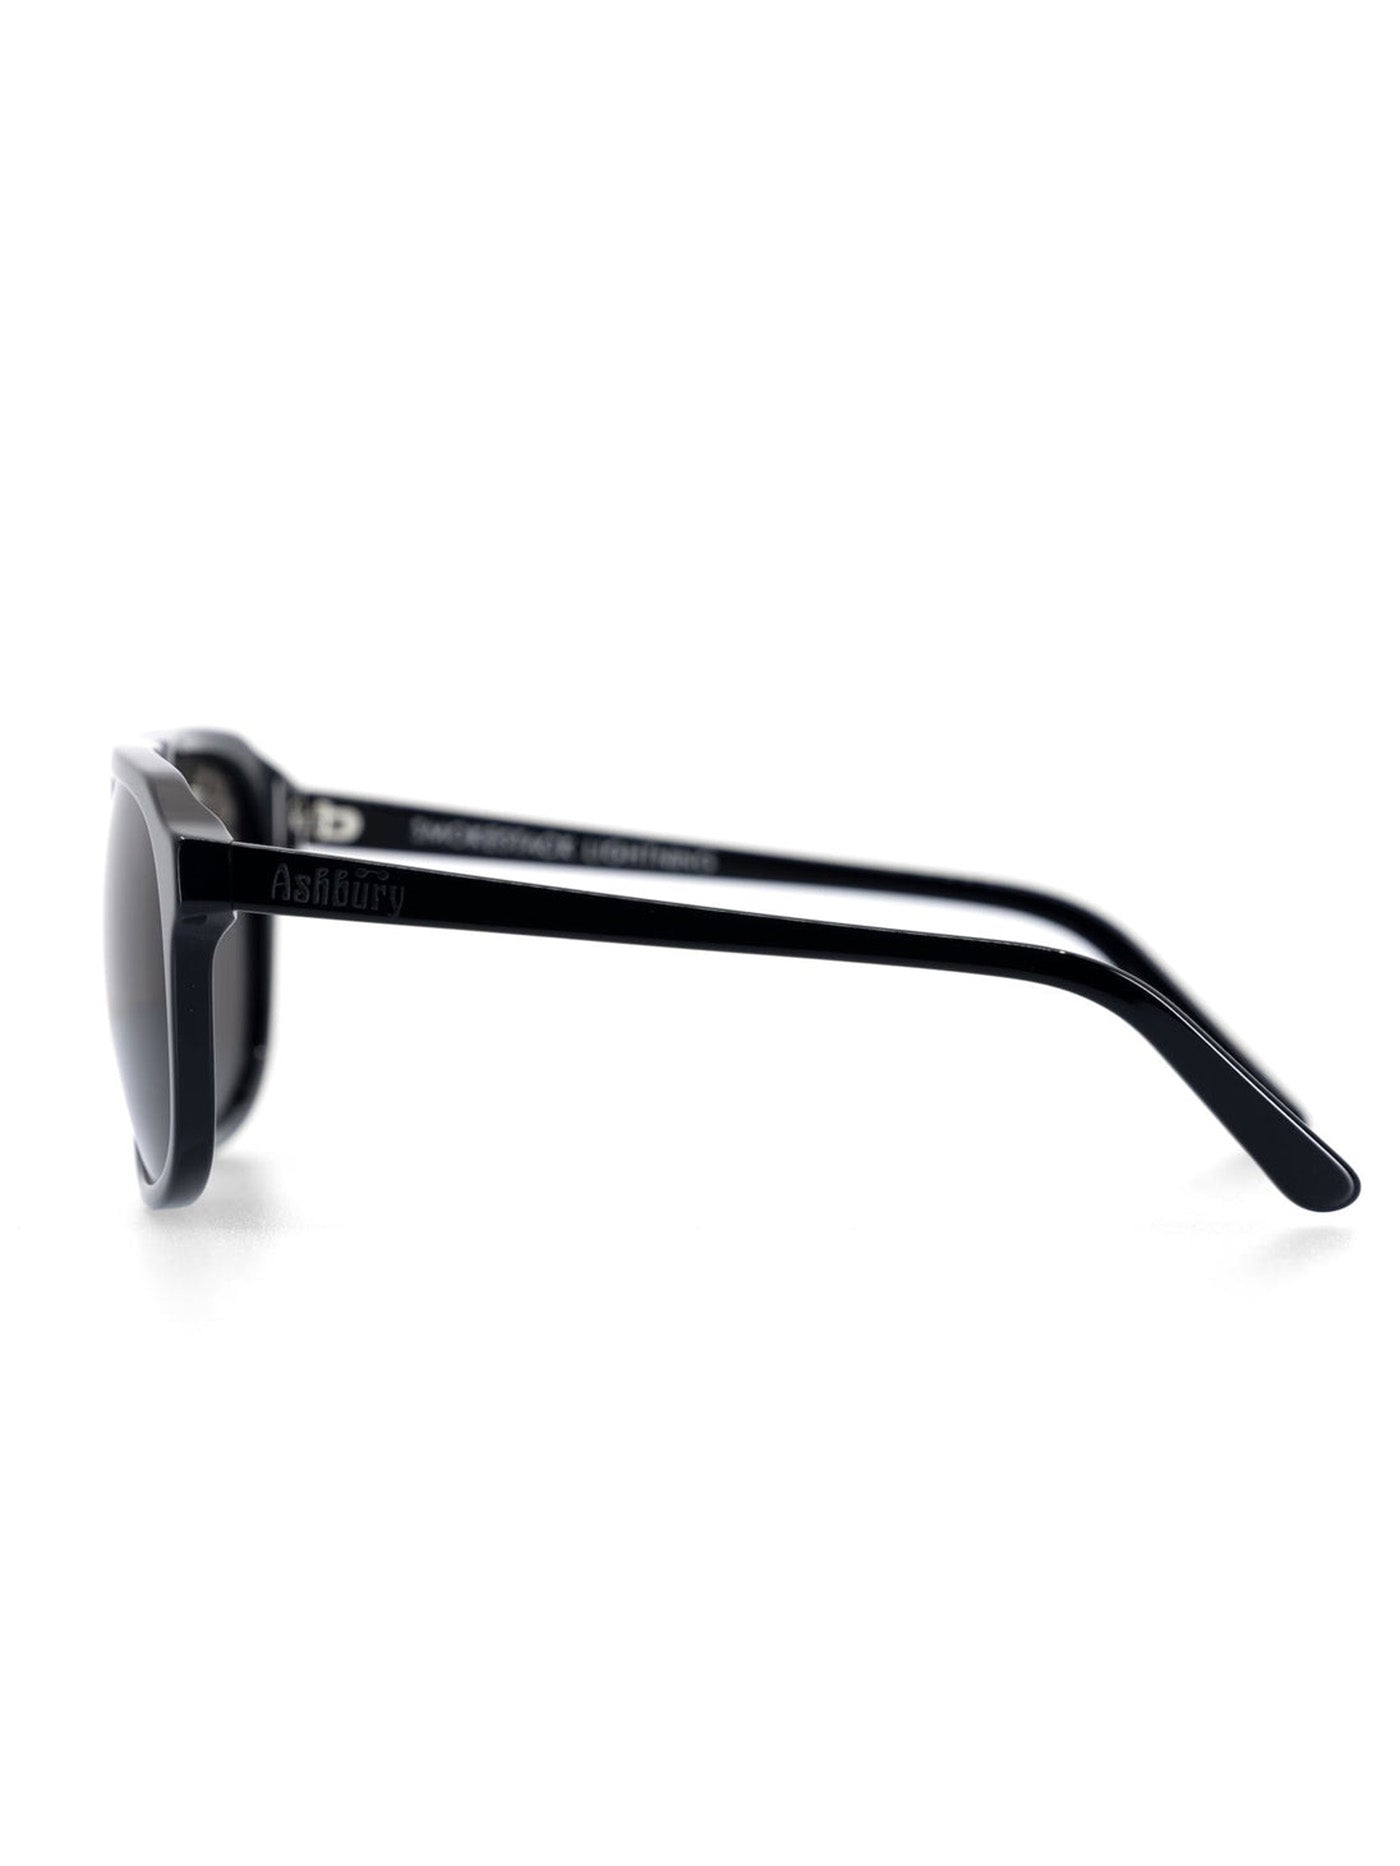 Ashbury Smokestack Lightning Black Gloss Sunglasses